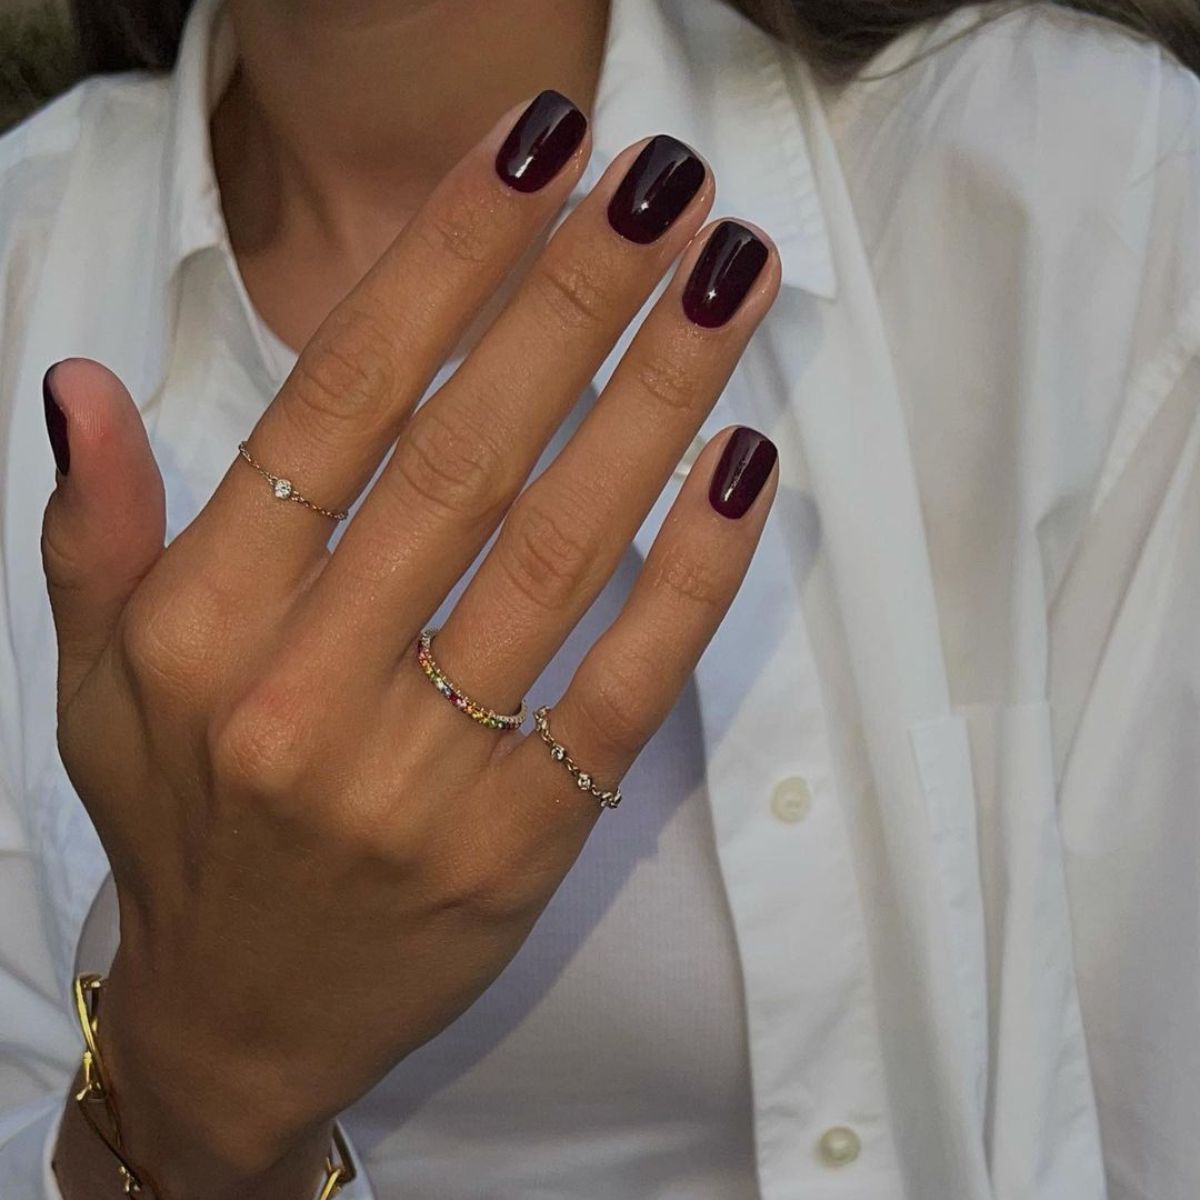 Premium Photo | A single Solitary glamorous maroon nail polish on a maroon  background